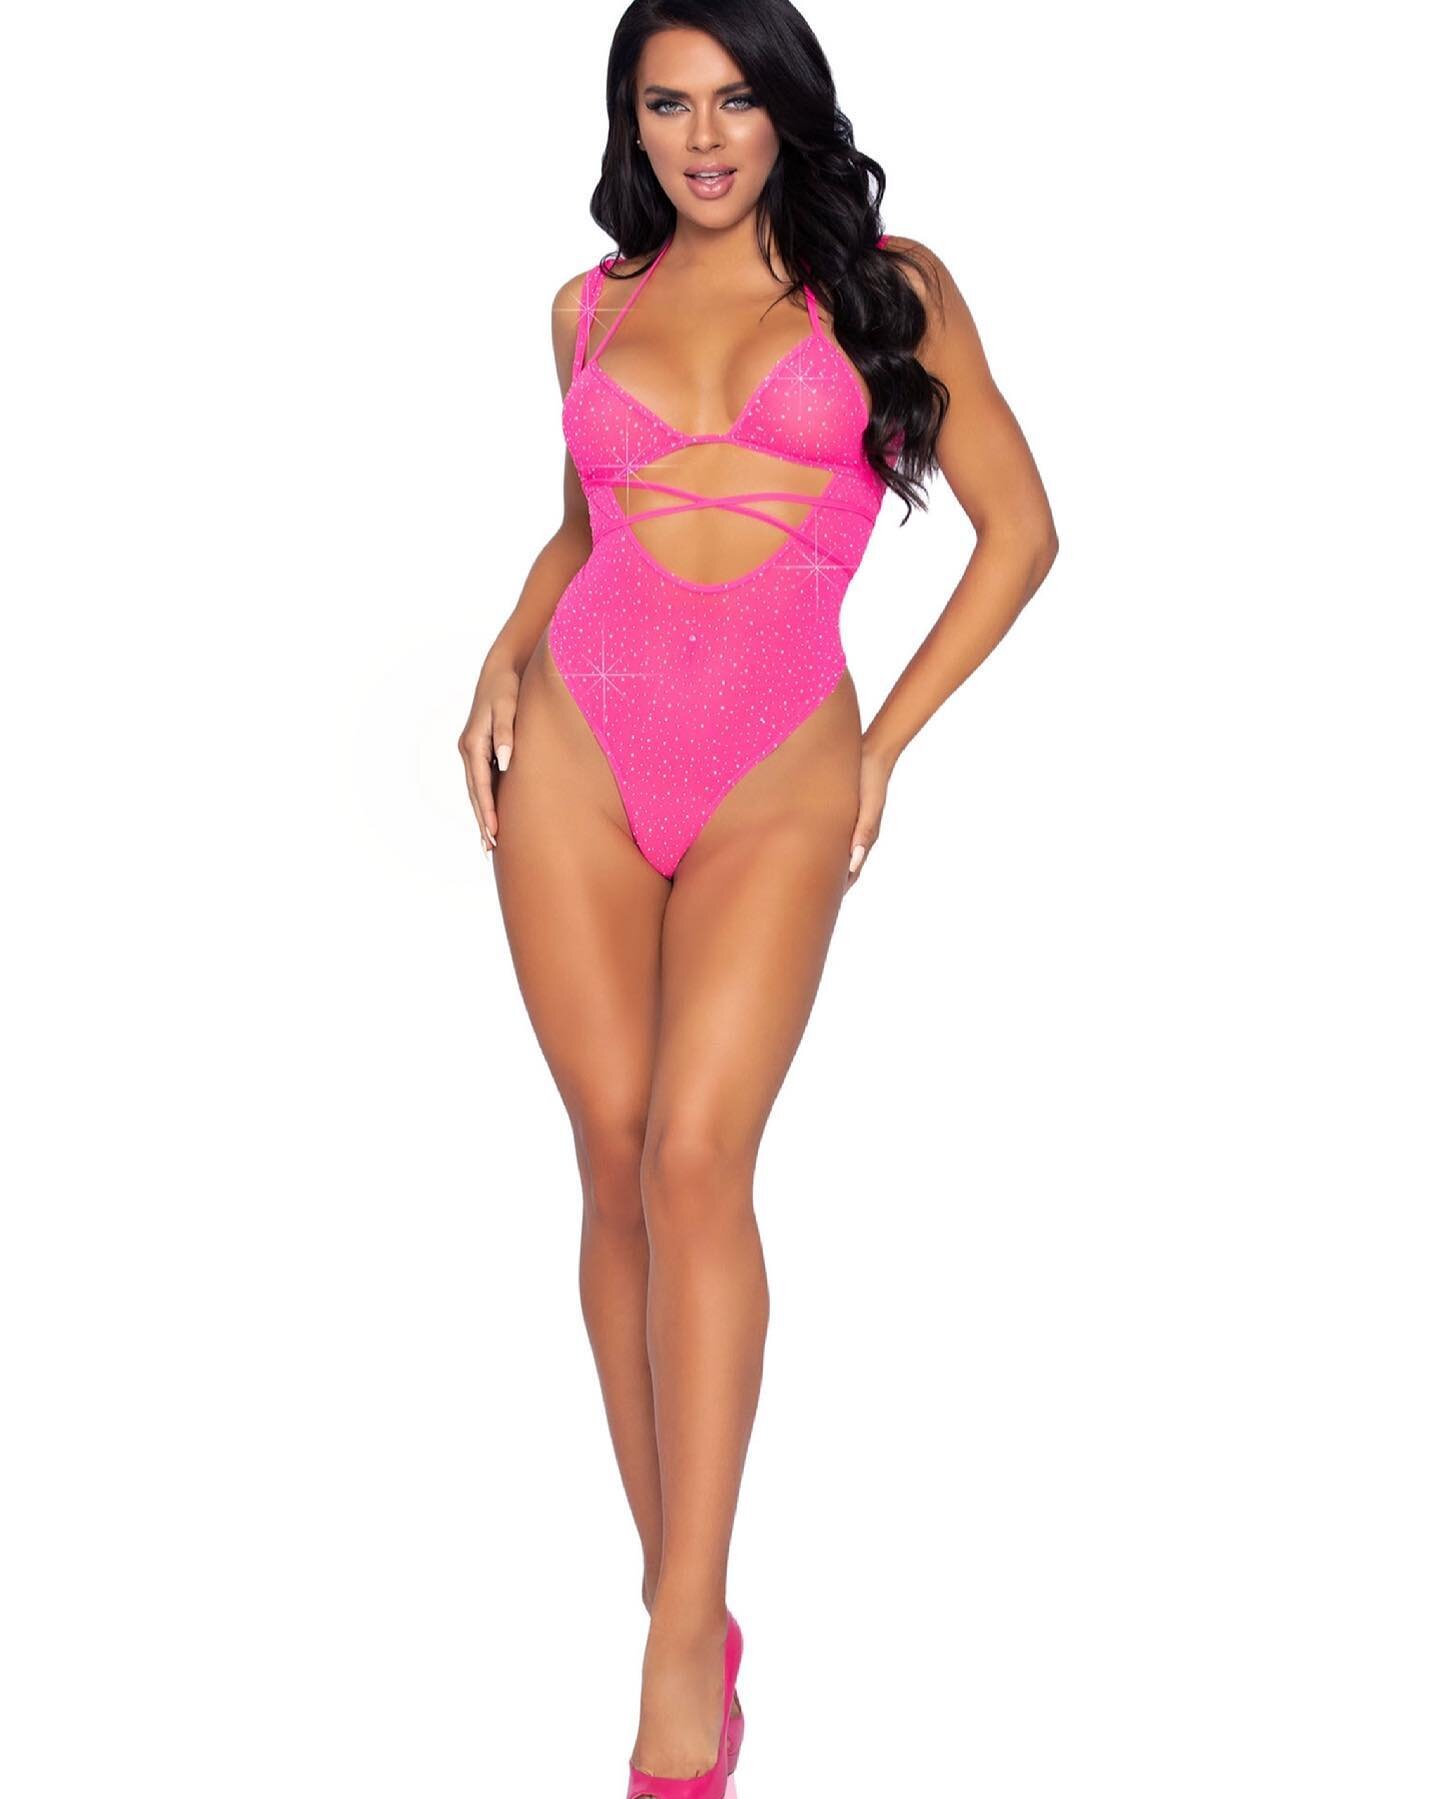 🚨NEW 2021 INVENTORY🚨

SEARCH: BODYSUITS 

2 Pc. Rhinestone Wrap Around Bikini Top and Suspender Bodysuit - One Size - Neon Pink

#rhinestones #newproduct #newproducts #newinventory #salesalesale #sale #sales  #discount #discountcode #discountshoppi